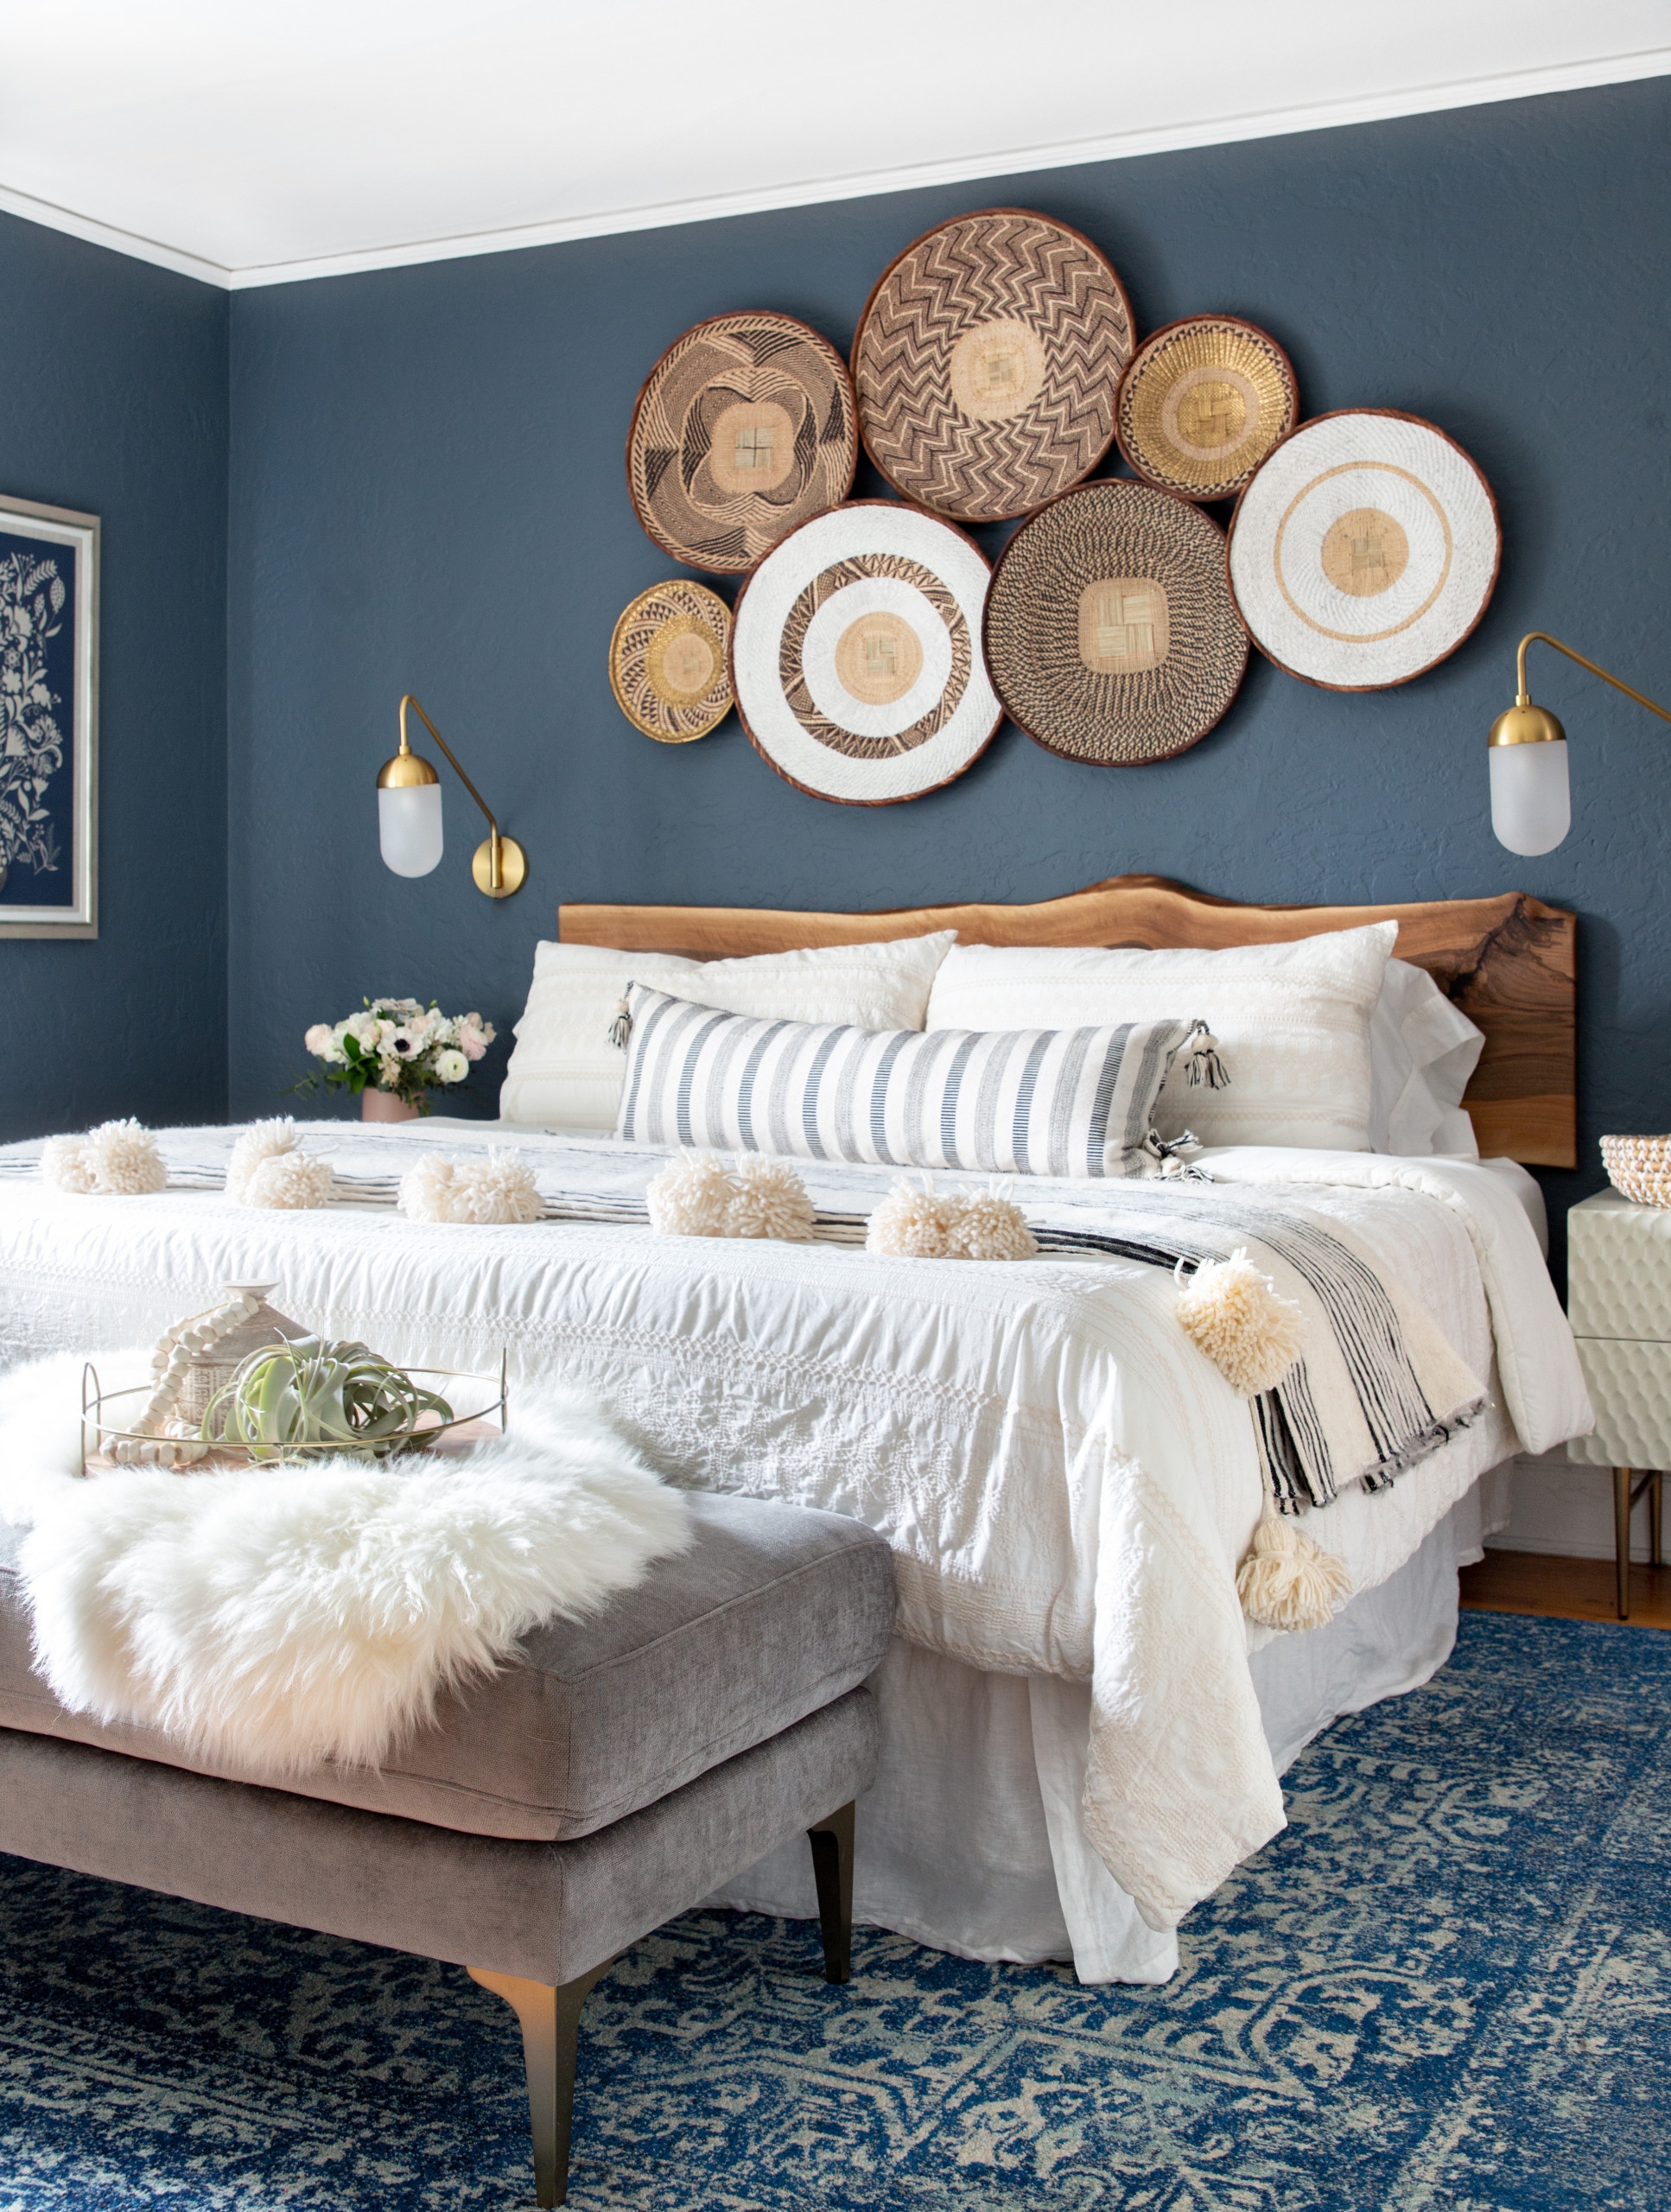 30 Bohemian Decor Ideas - Boho Room Style Decorating and Inspiration